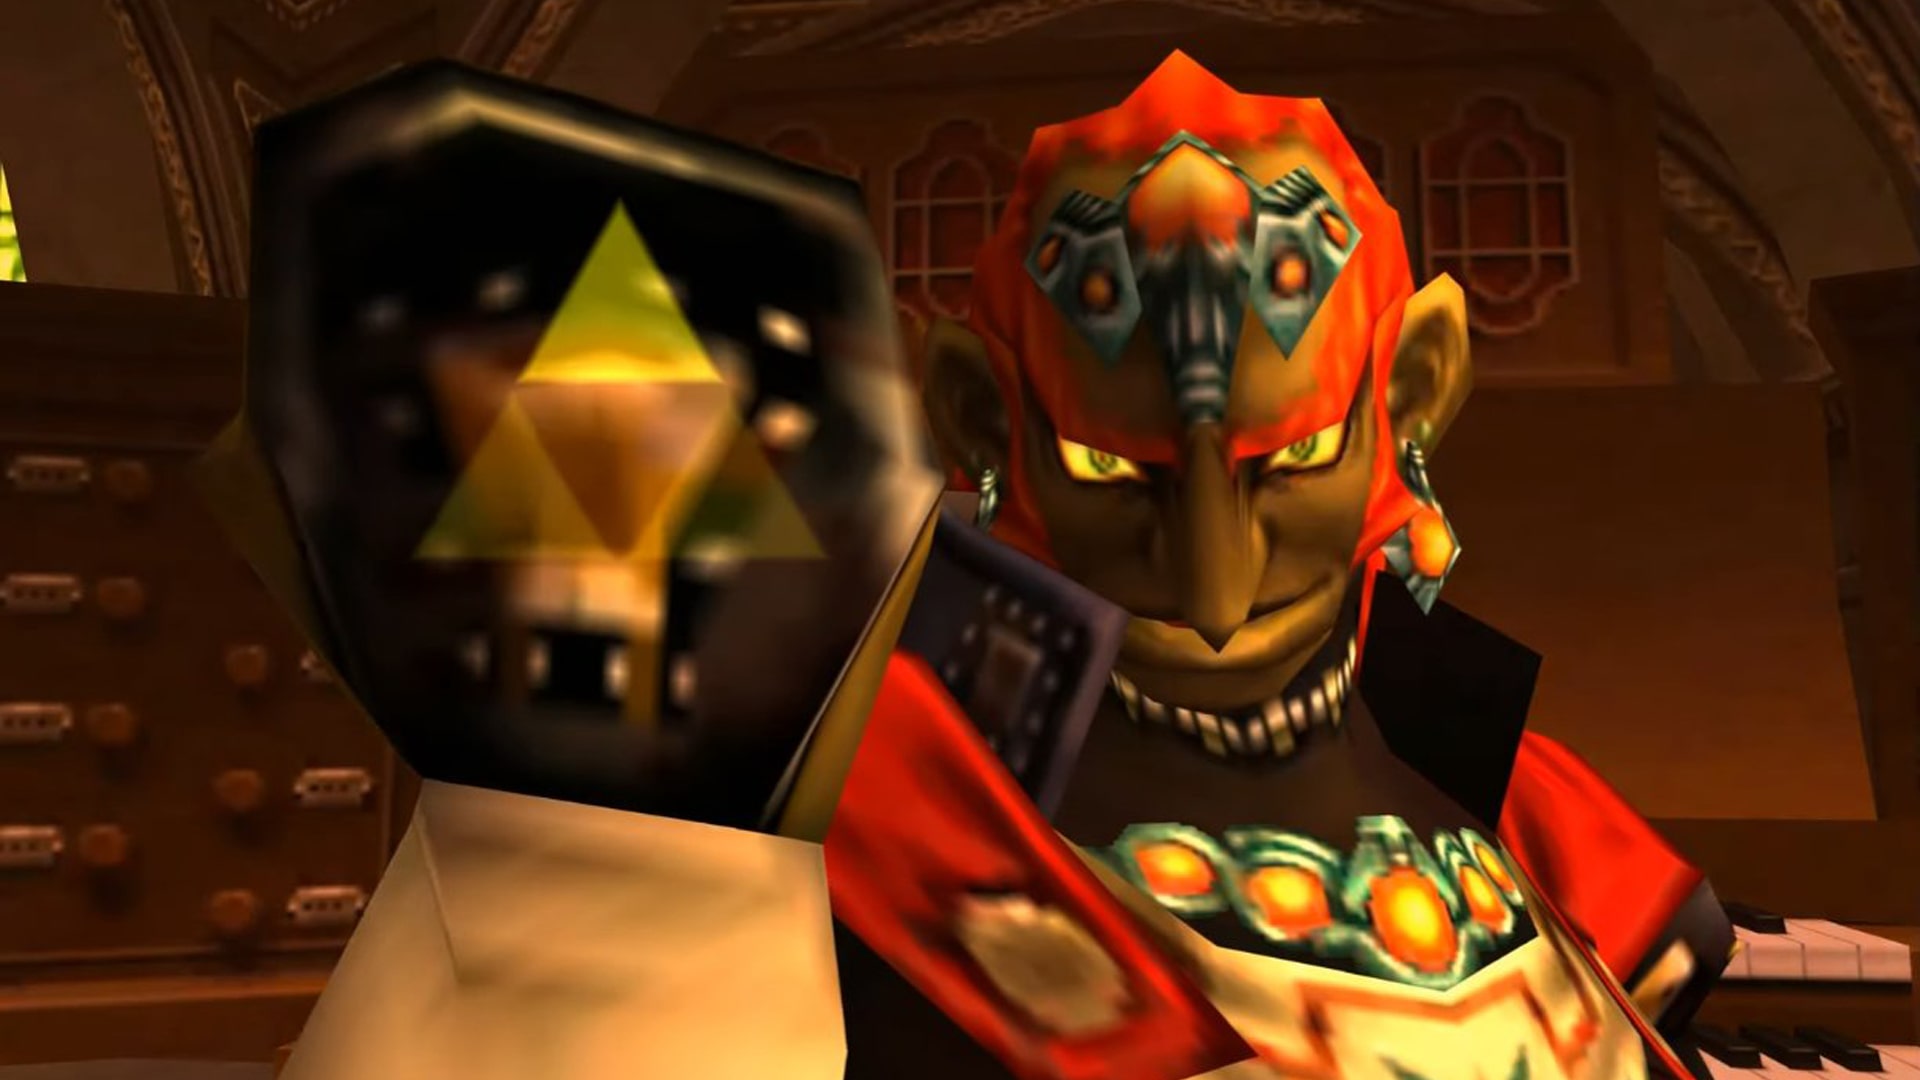 Ganondorf, the Antagonist in The Legend of Zelda: Ocarina of Time